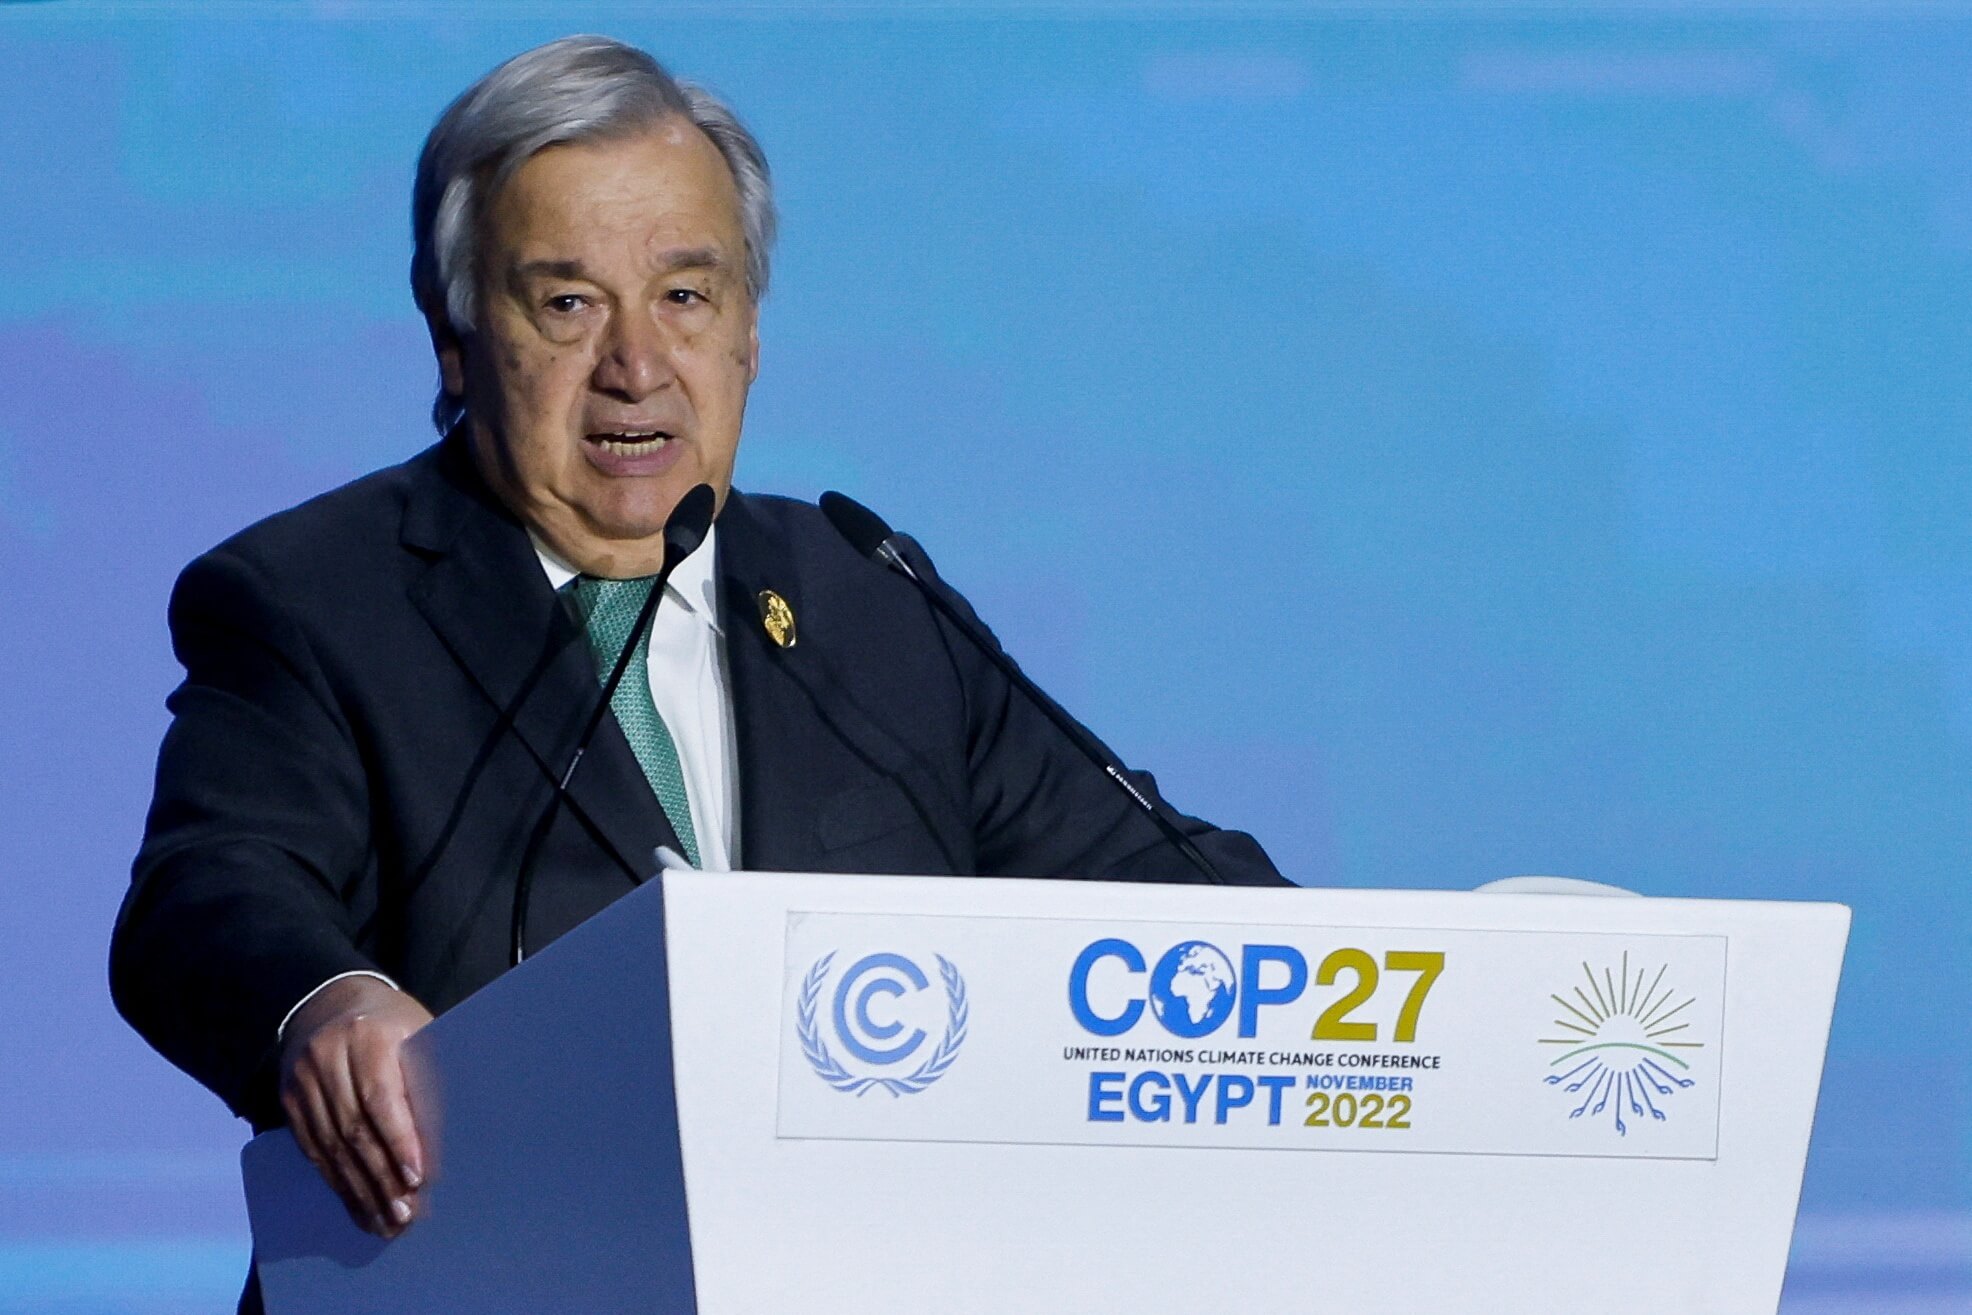 Público: Cimeira do Clima: “Estamos numa auto-estrada para o inferno”, disse Guterres